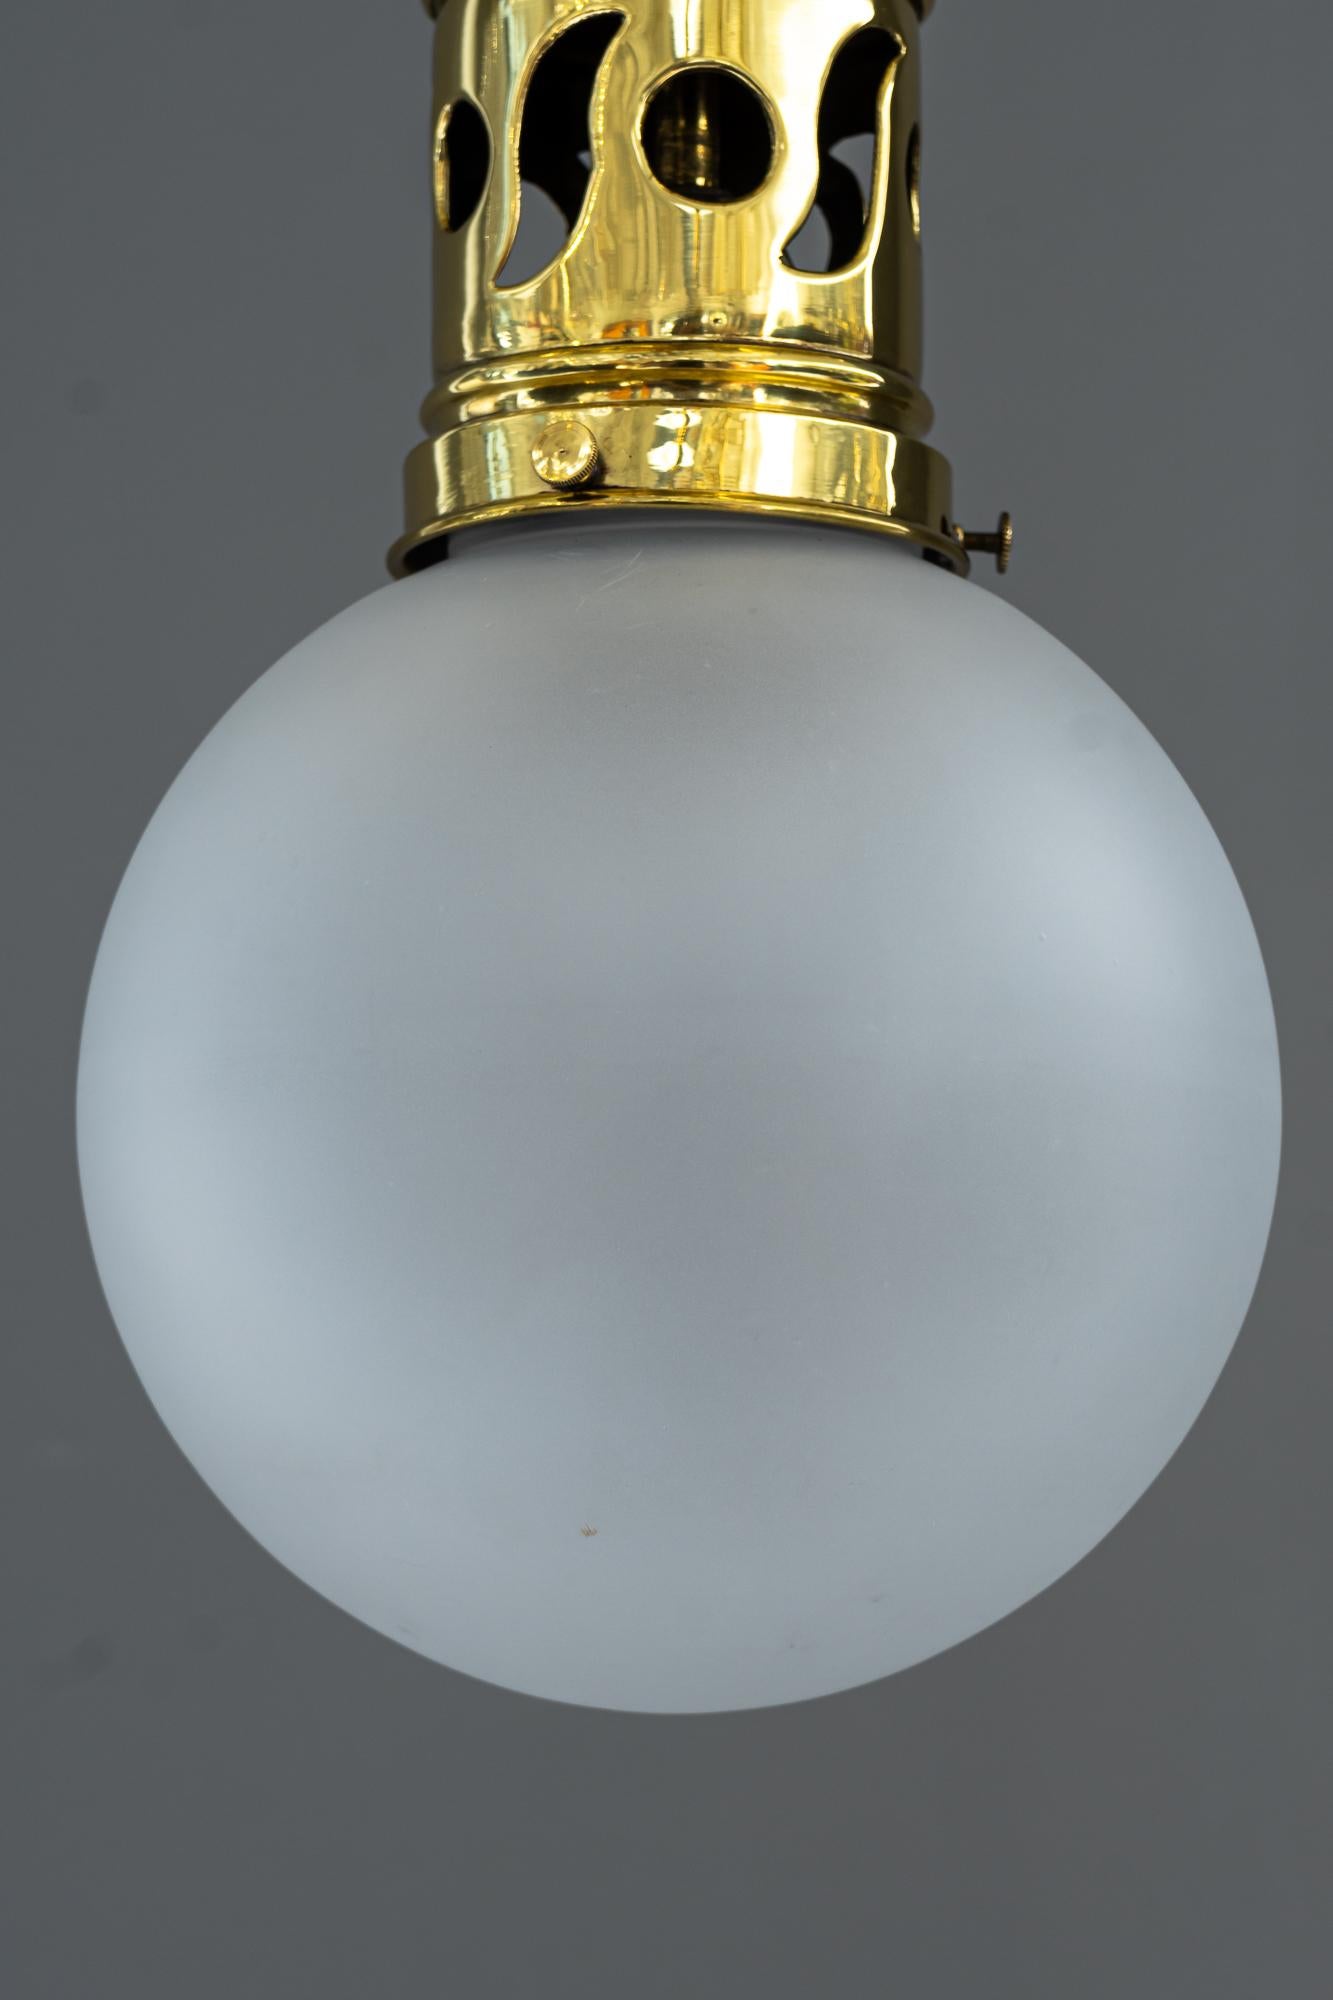 Jugendstil Ceiling Lamp circa 1908 with Original Opaline Glass Shade For Sale 3